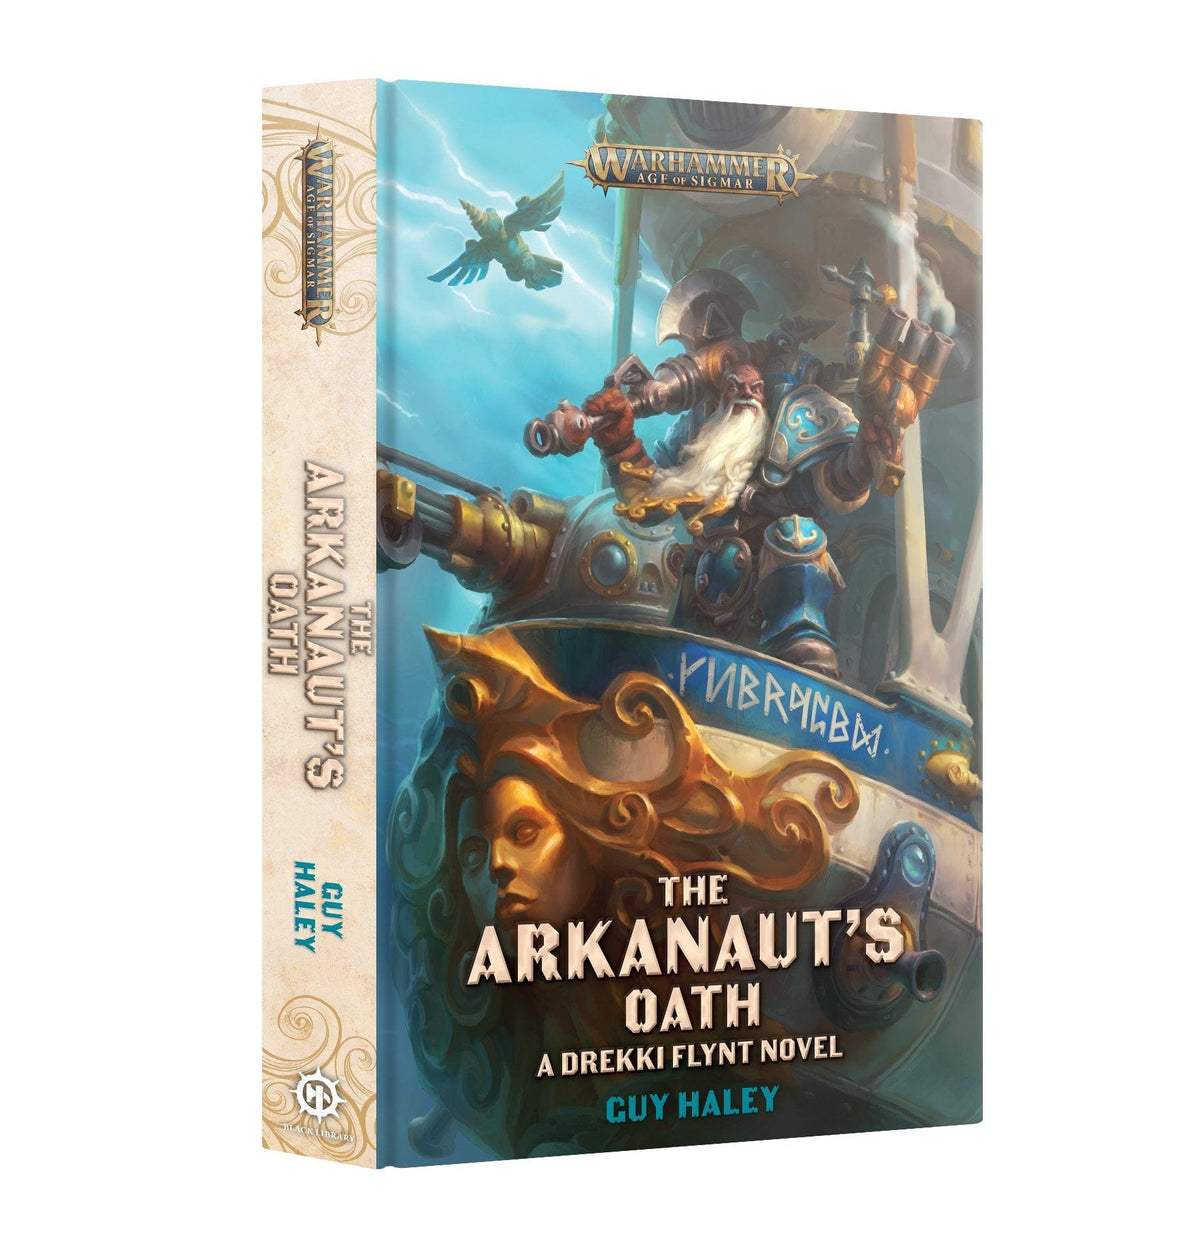 Warhammer - Age of Sigmar: Drekki Flynt - Arkanaut's Oath - Third Eye